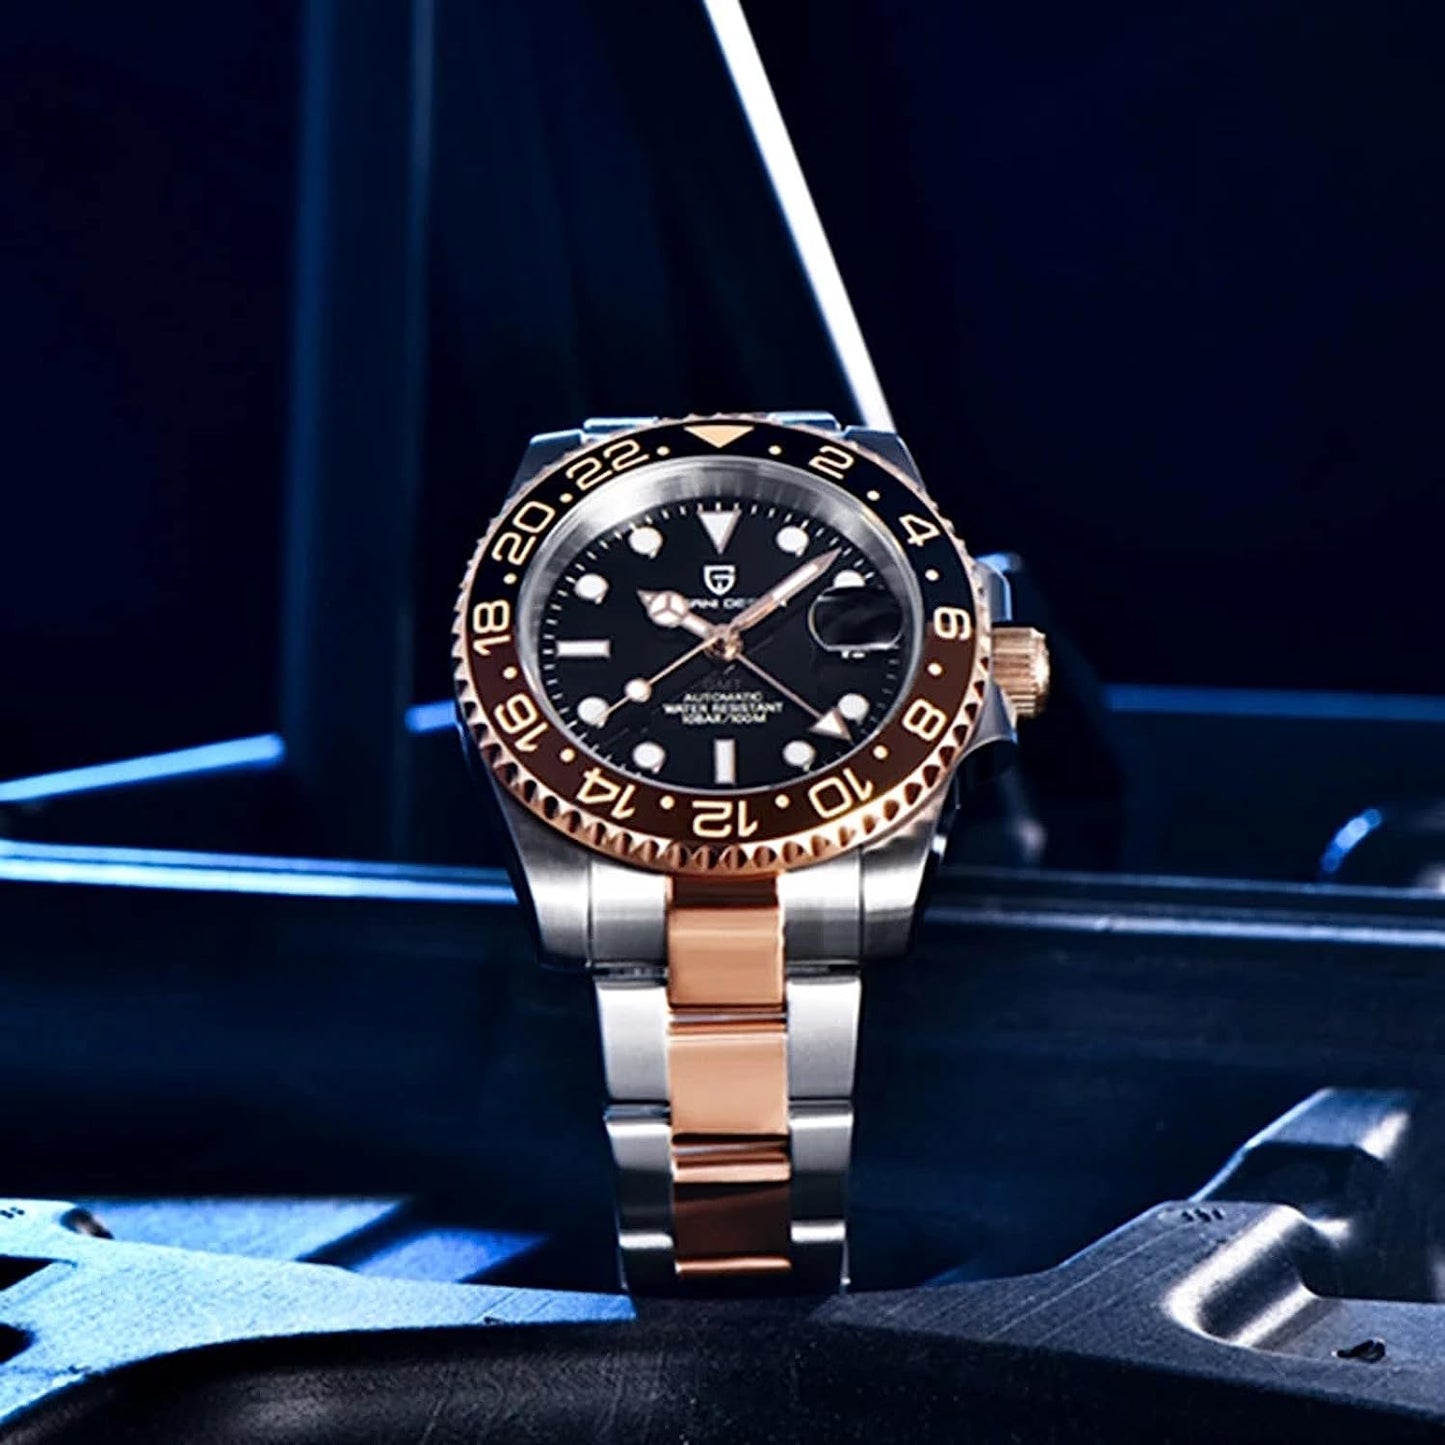 PAGANI DESIGN PD1662 Automatic Men's Watches GMT 40mm Mechanical Stainless Steel Wrist Watch Sapphire Glass Sports Waterproof Clock